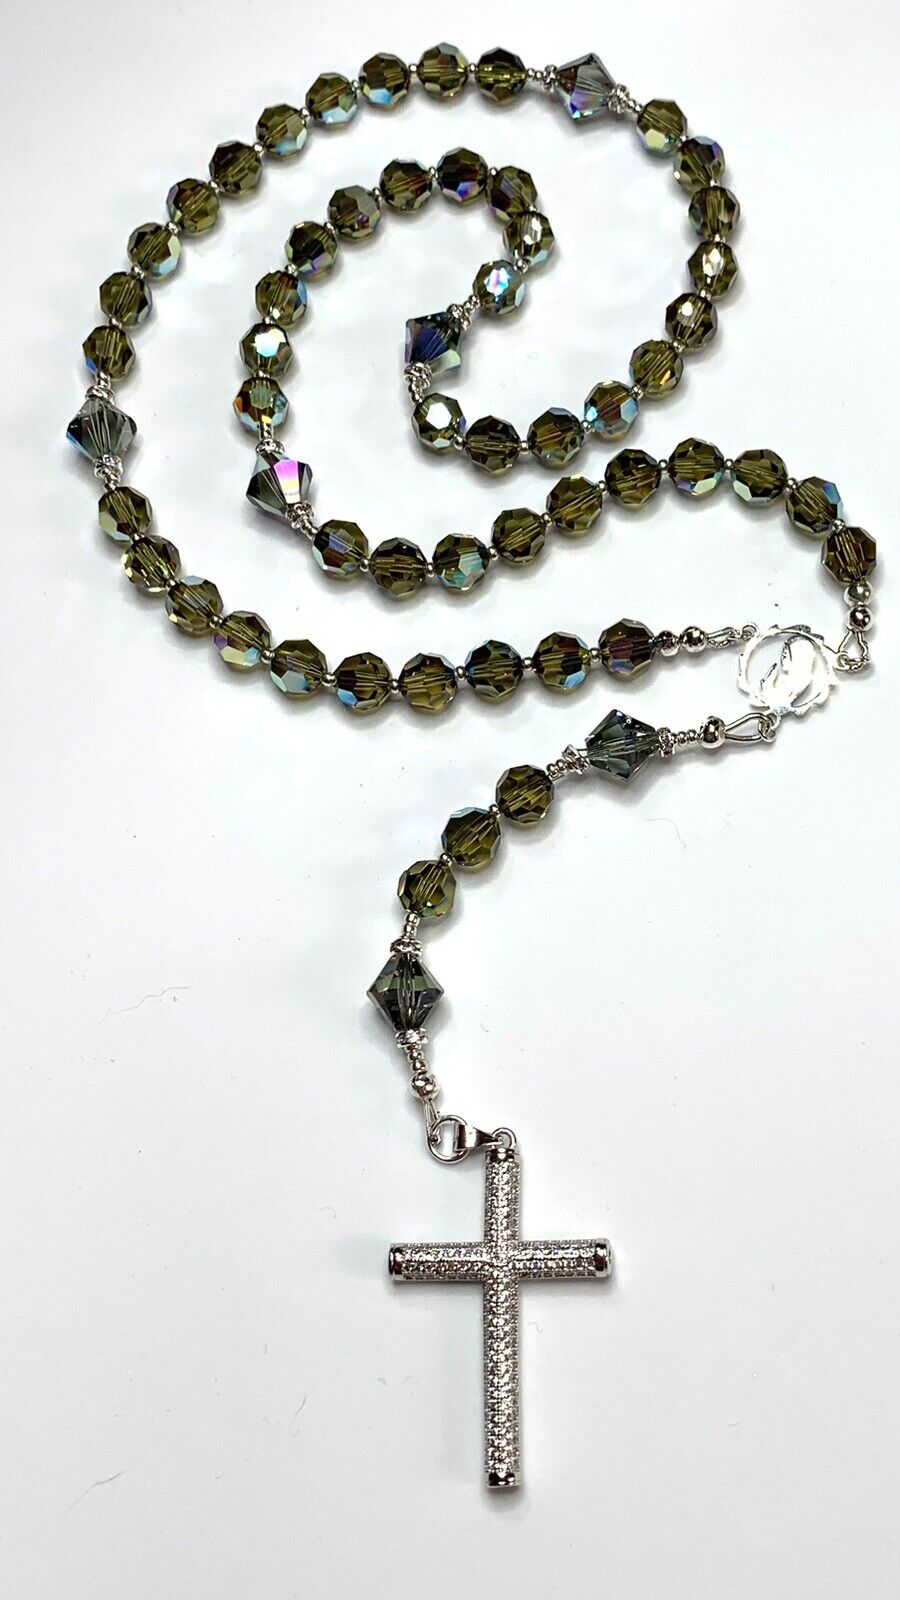 Rosary Beads - High Quality - Made With Swarovski Crystals - Khaki